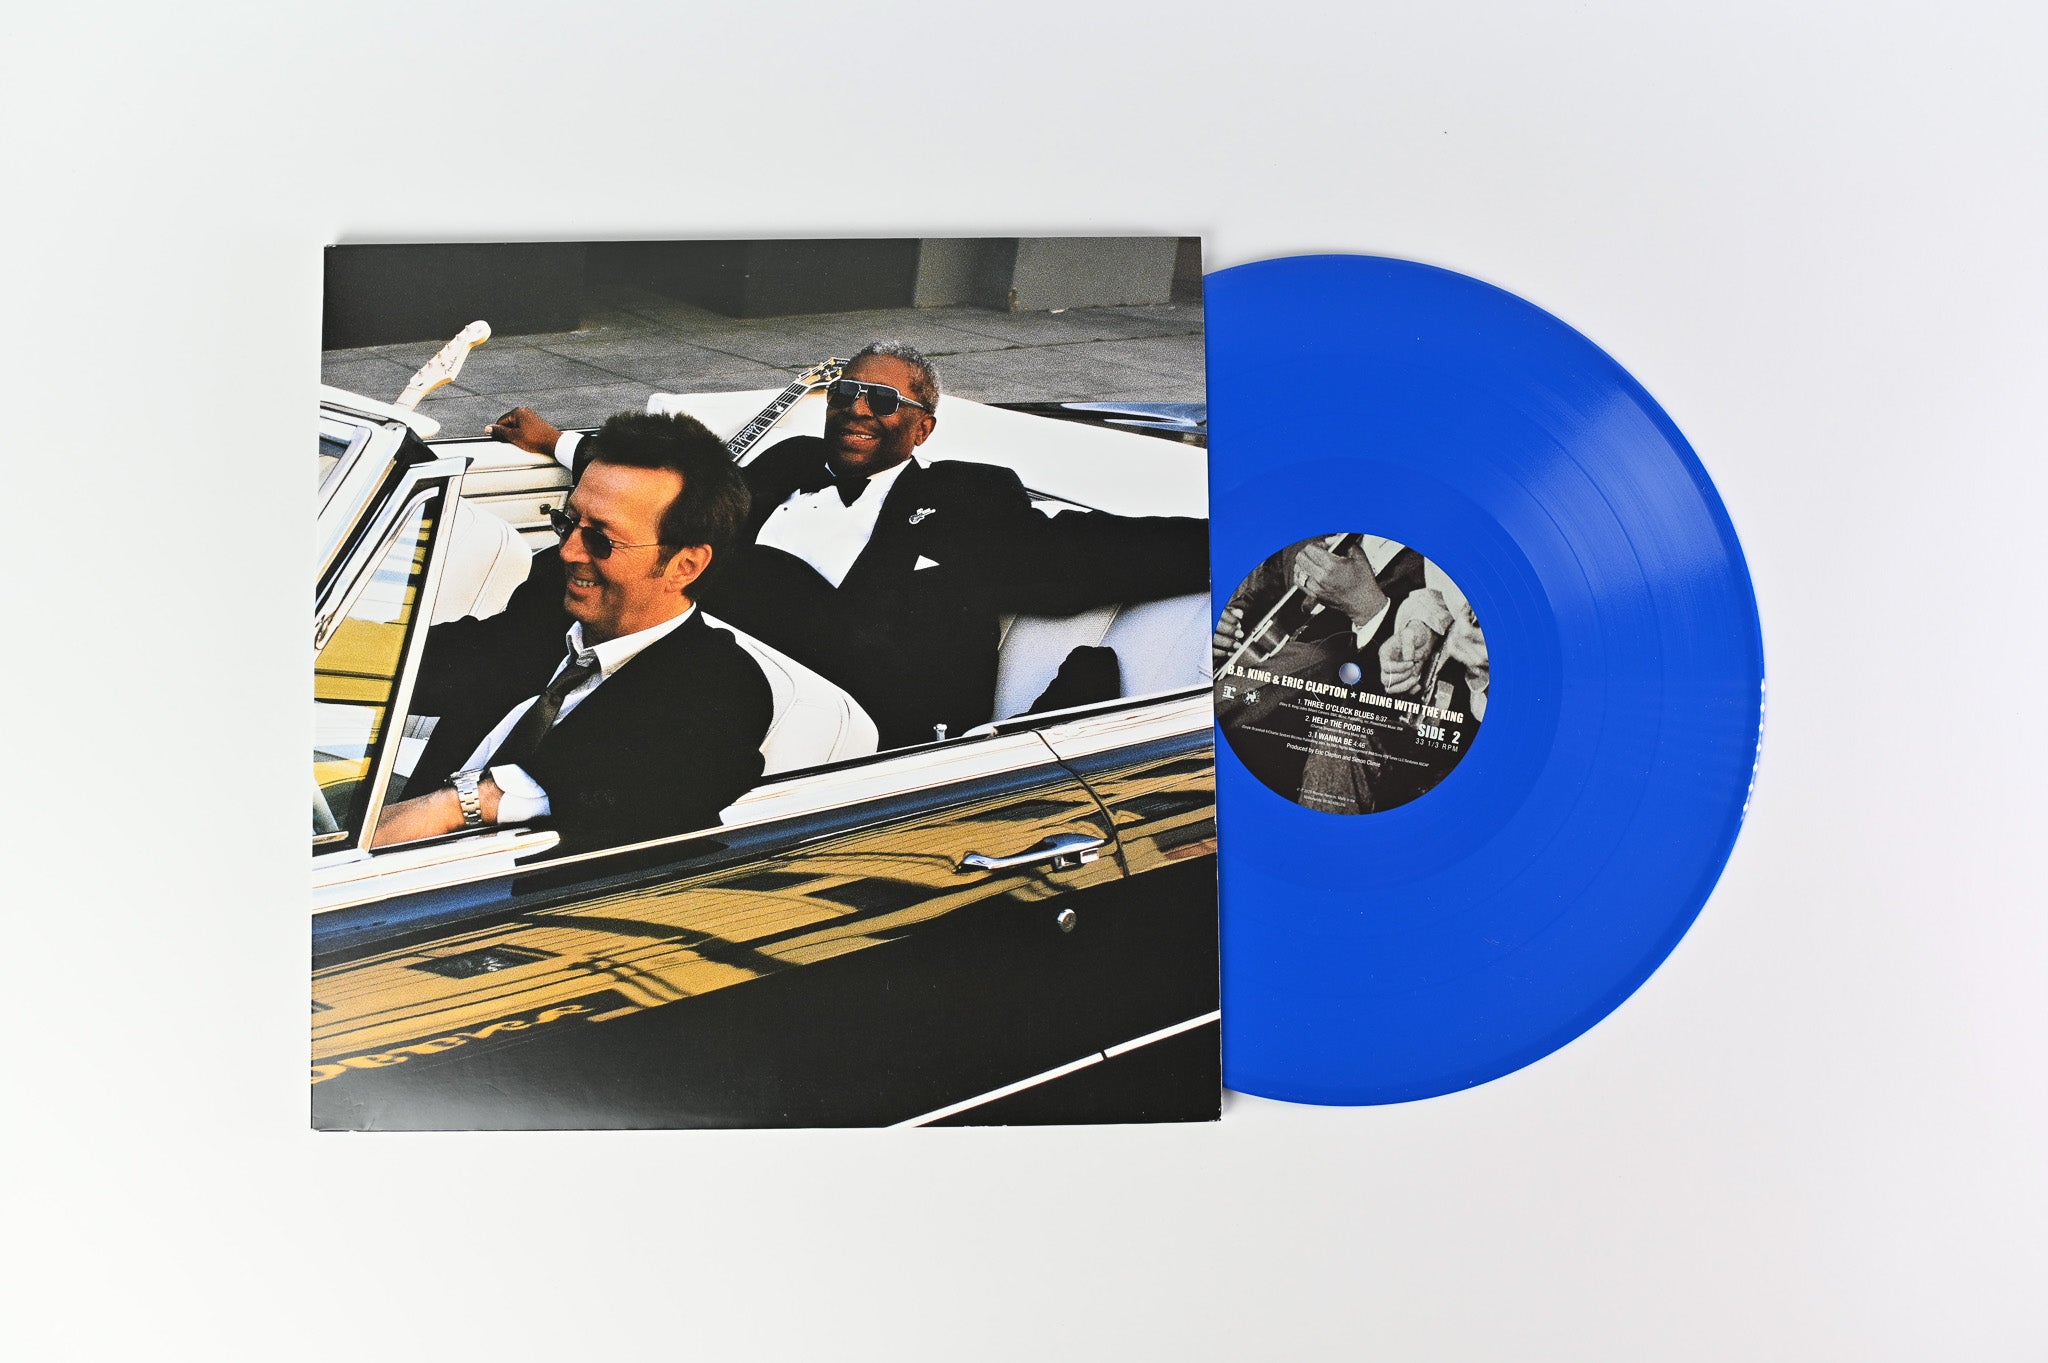 B.B. King - Riding With The King on Reprise Ltd Blue Vinyl Reissue